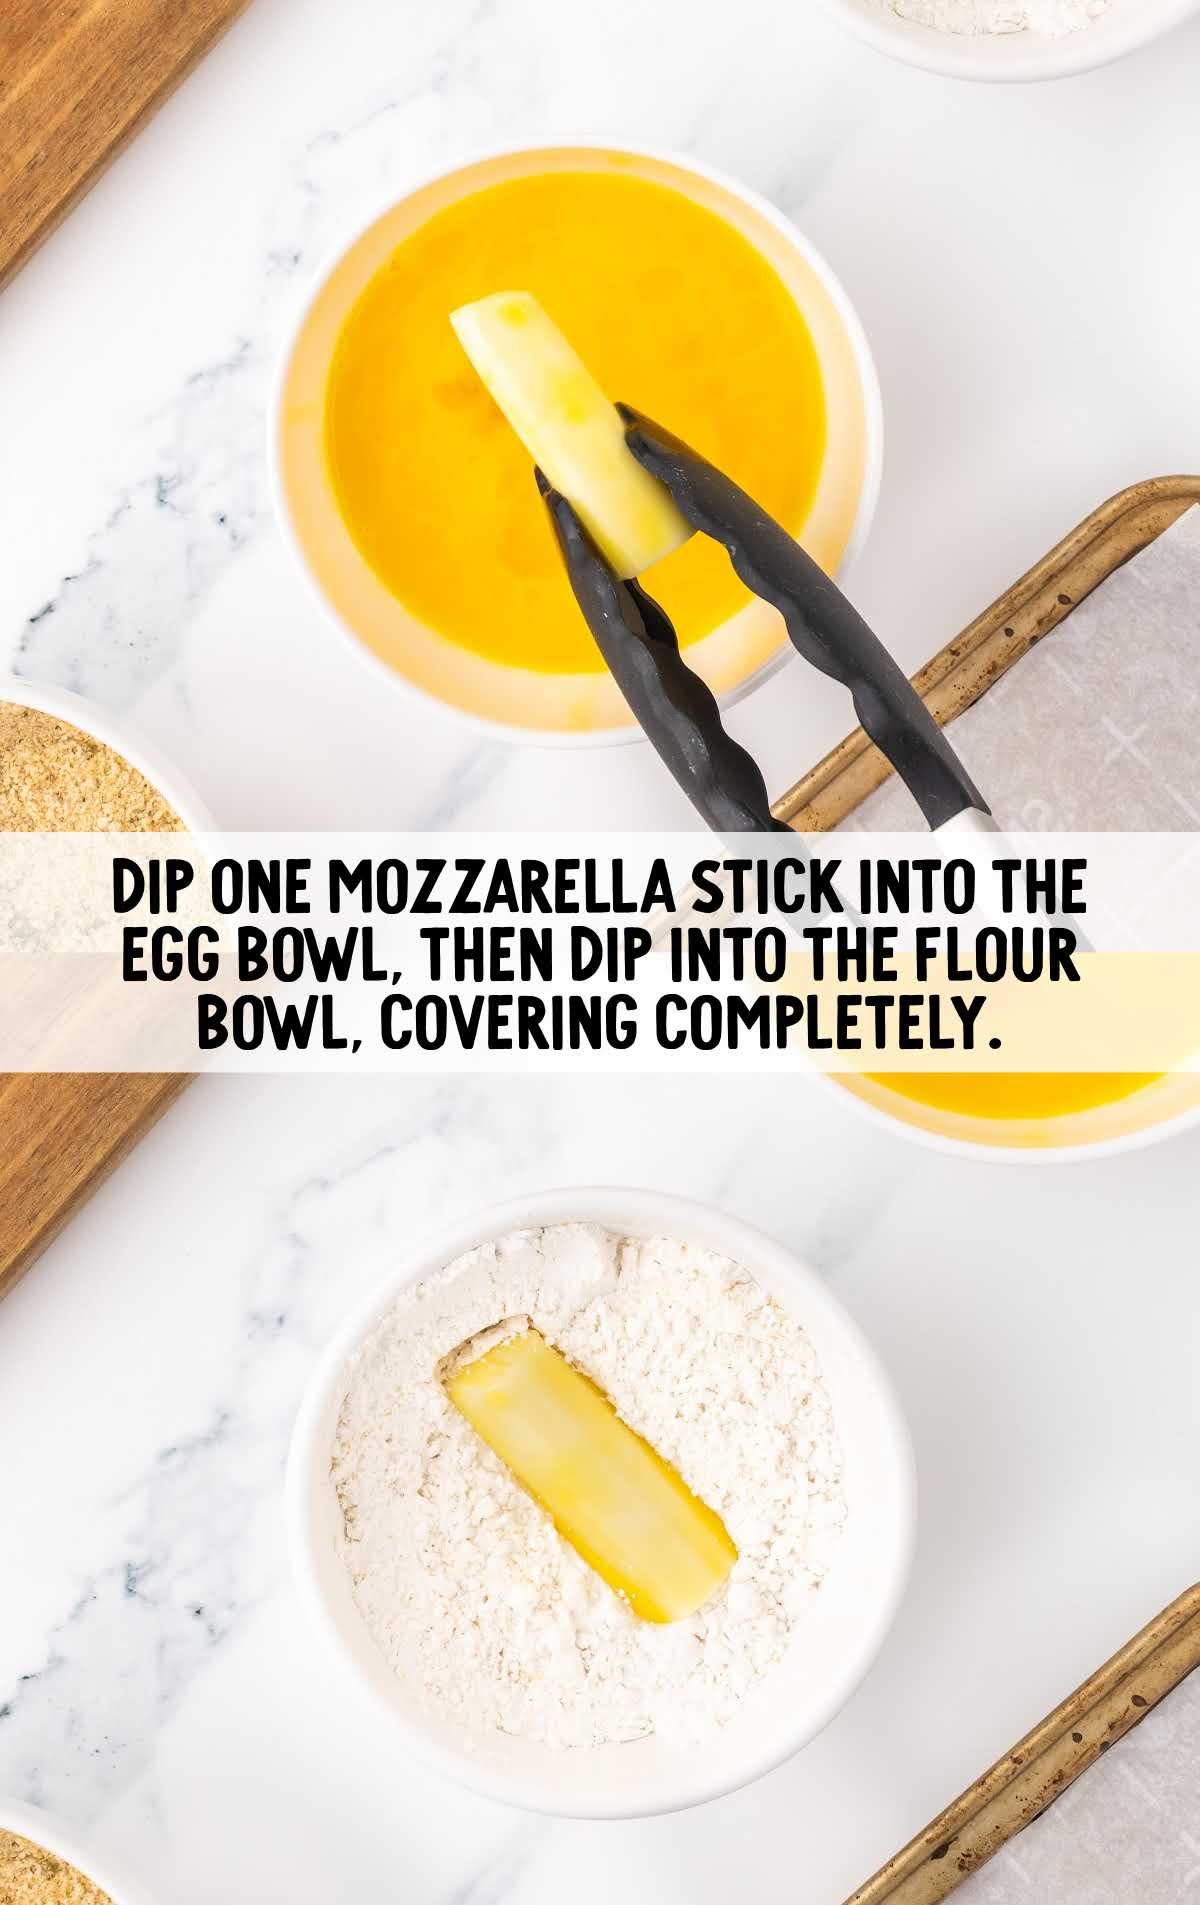 mozzarella stick dipped into the egg bowl and flour